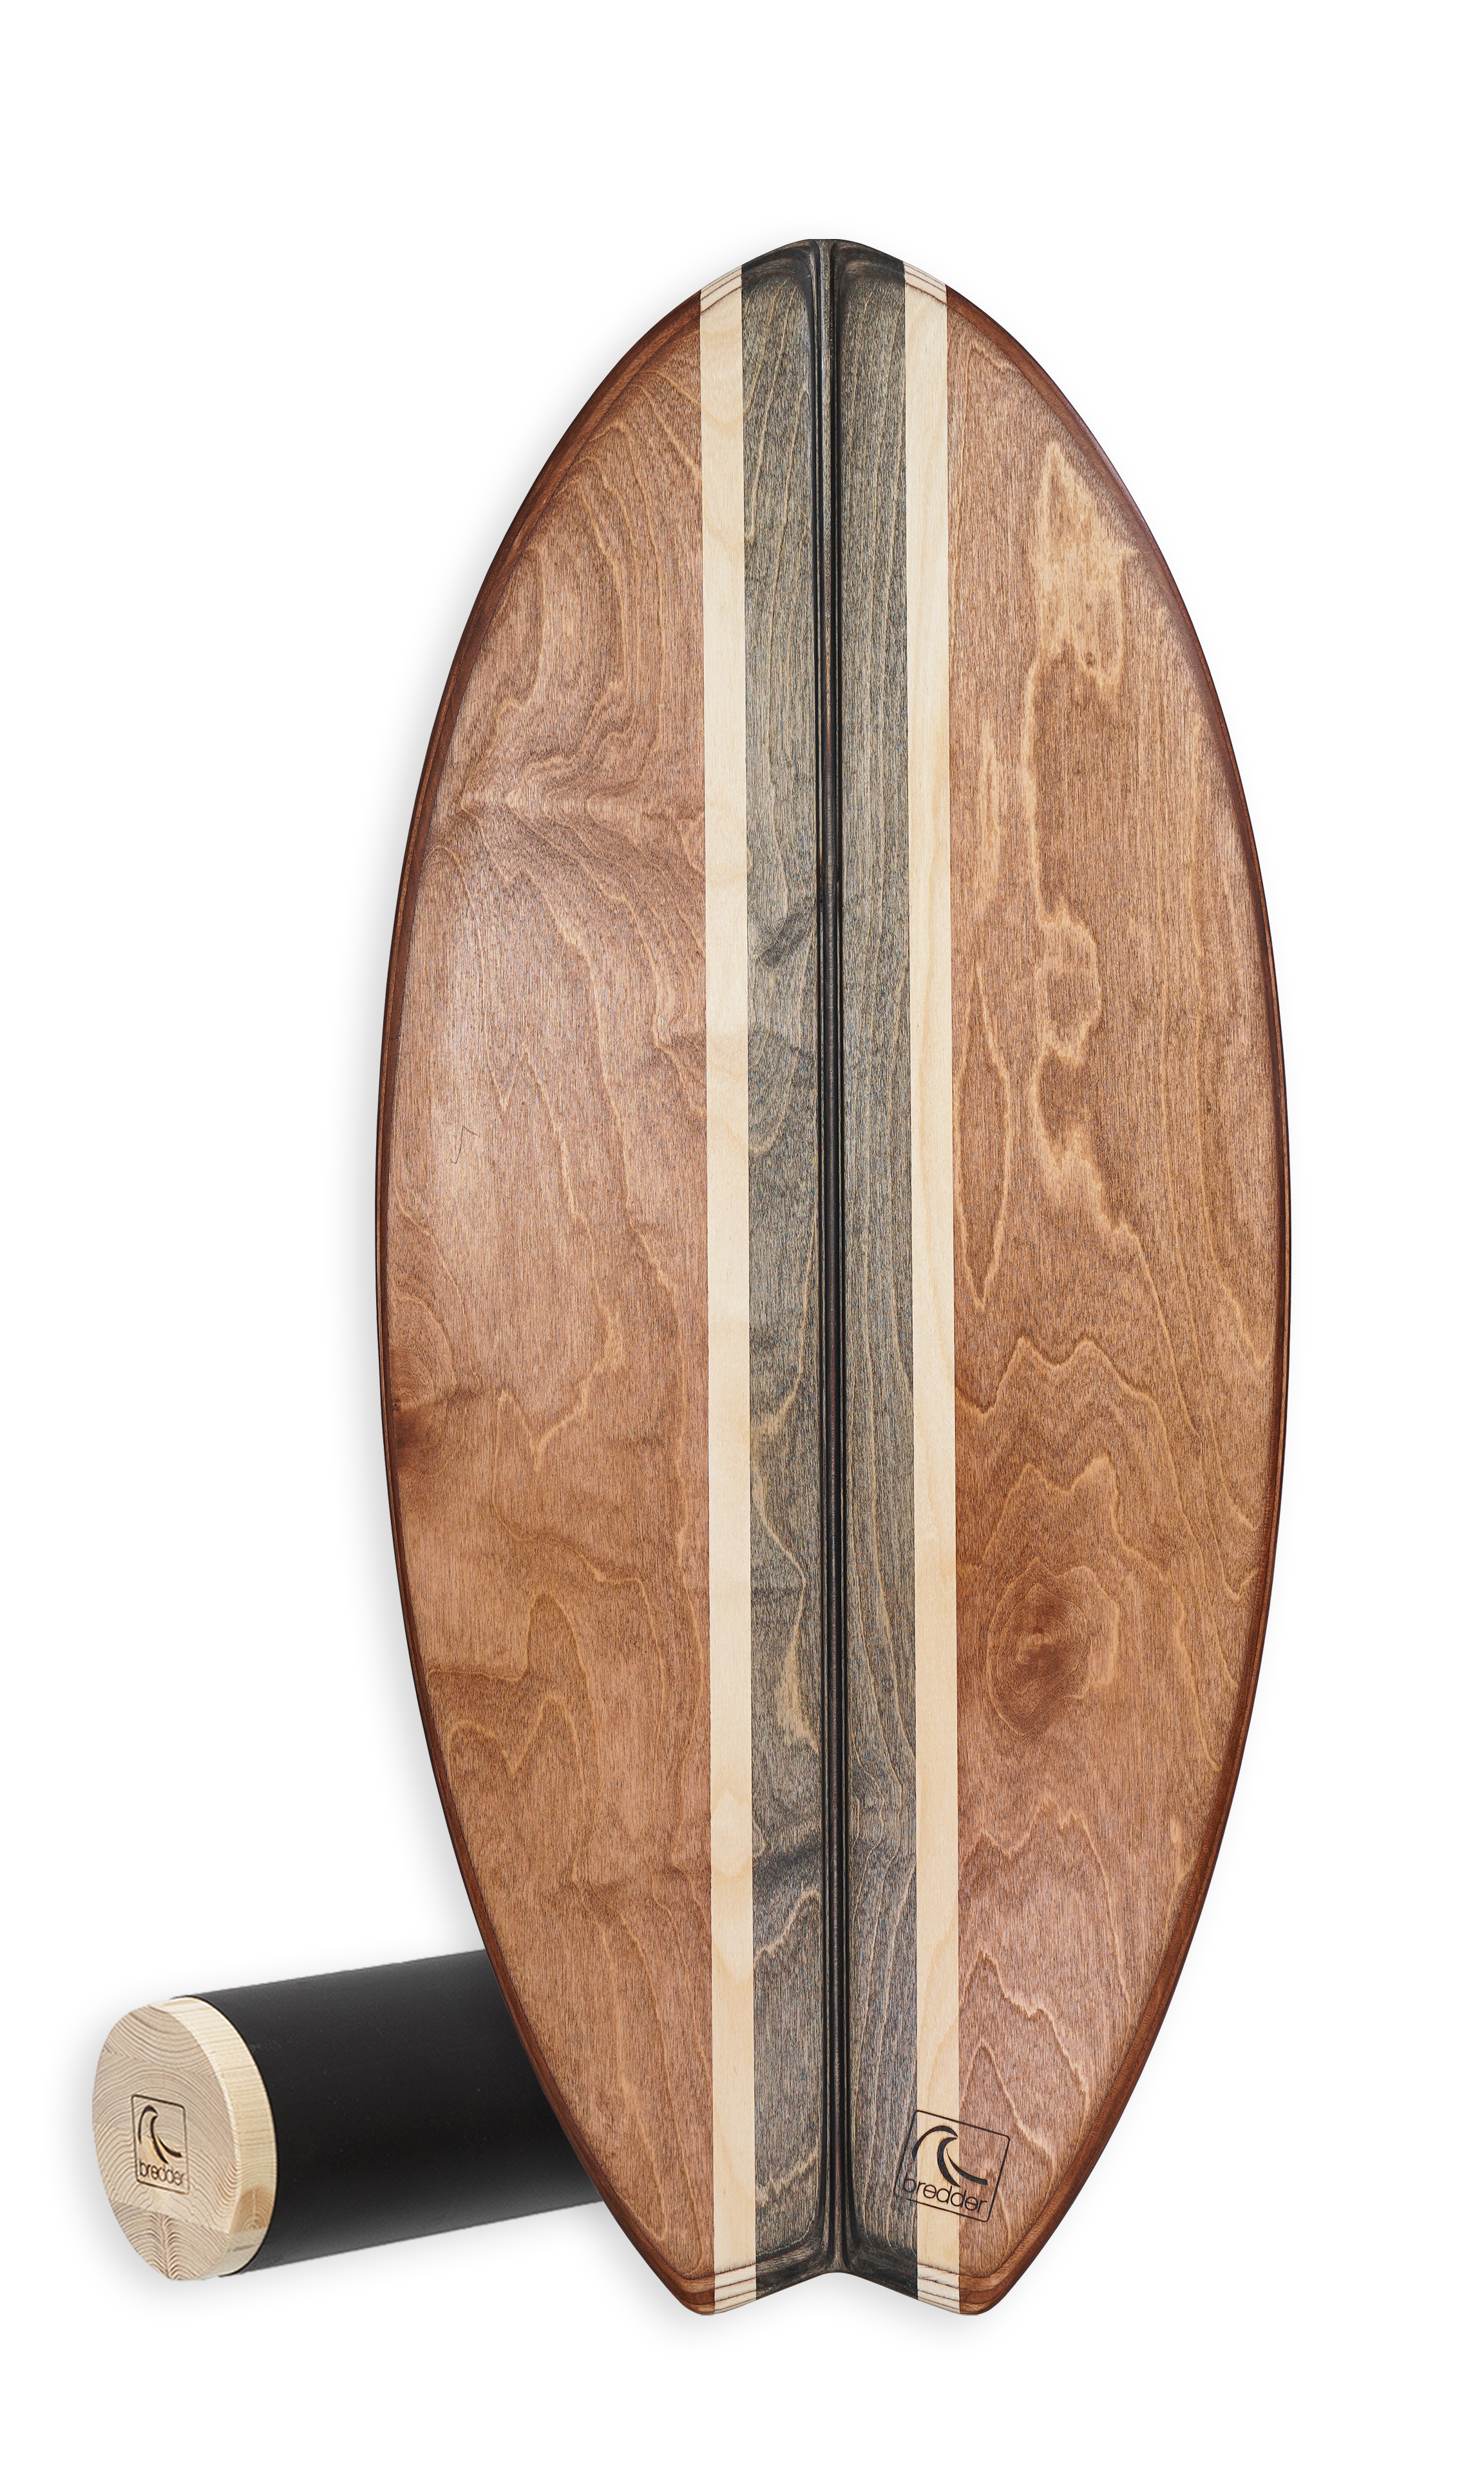 Leilani Fish Balance Board + Solid Wood Roller